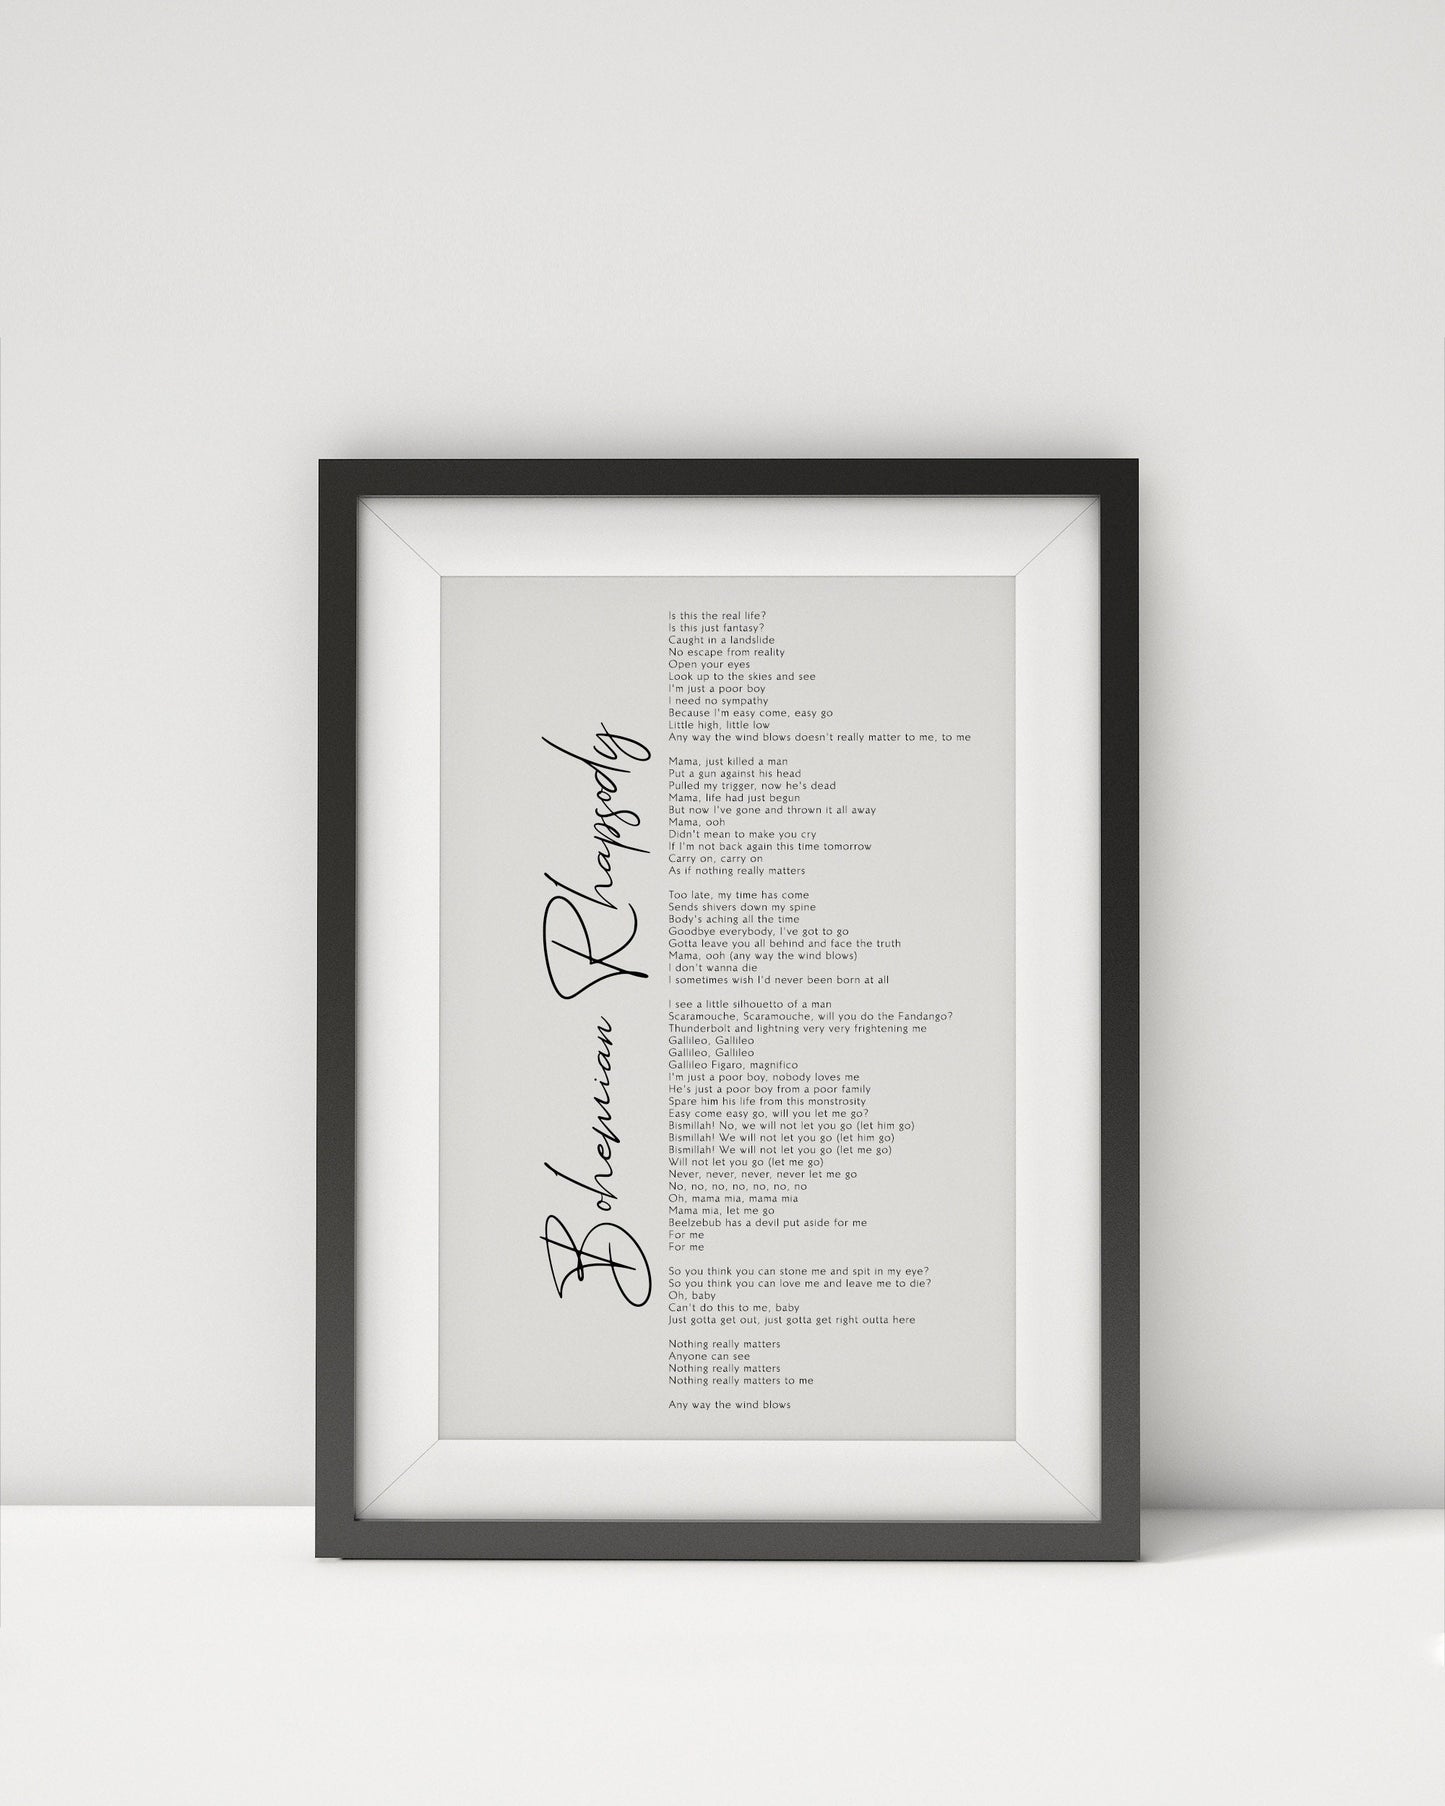 Bohemian Rhapsody Song Queen Print Framed - Queen Lyrics Print - Freddy Mercury Song Poster Print Frame - Bohemian Rhapsody Print